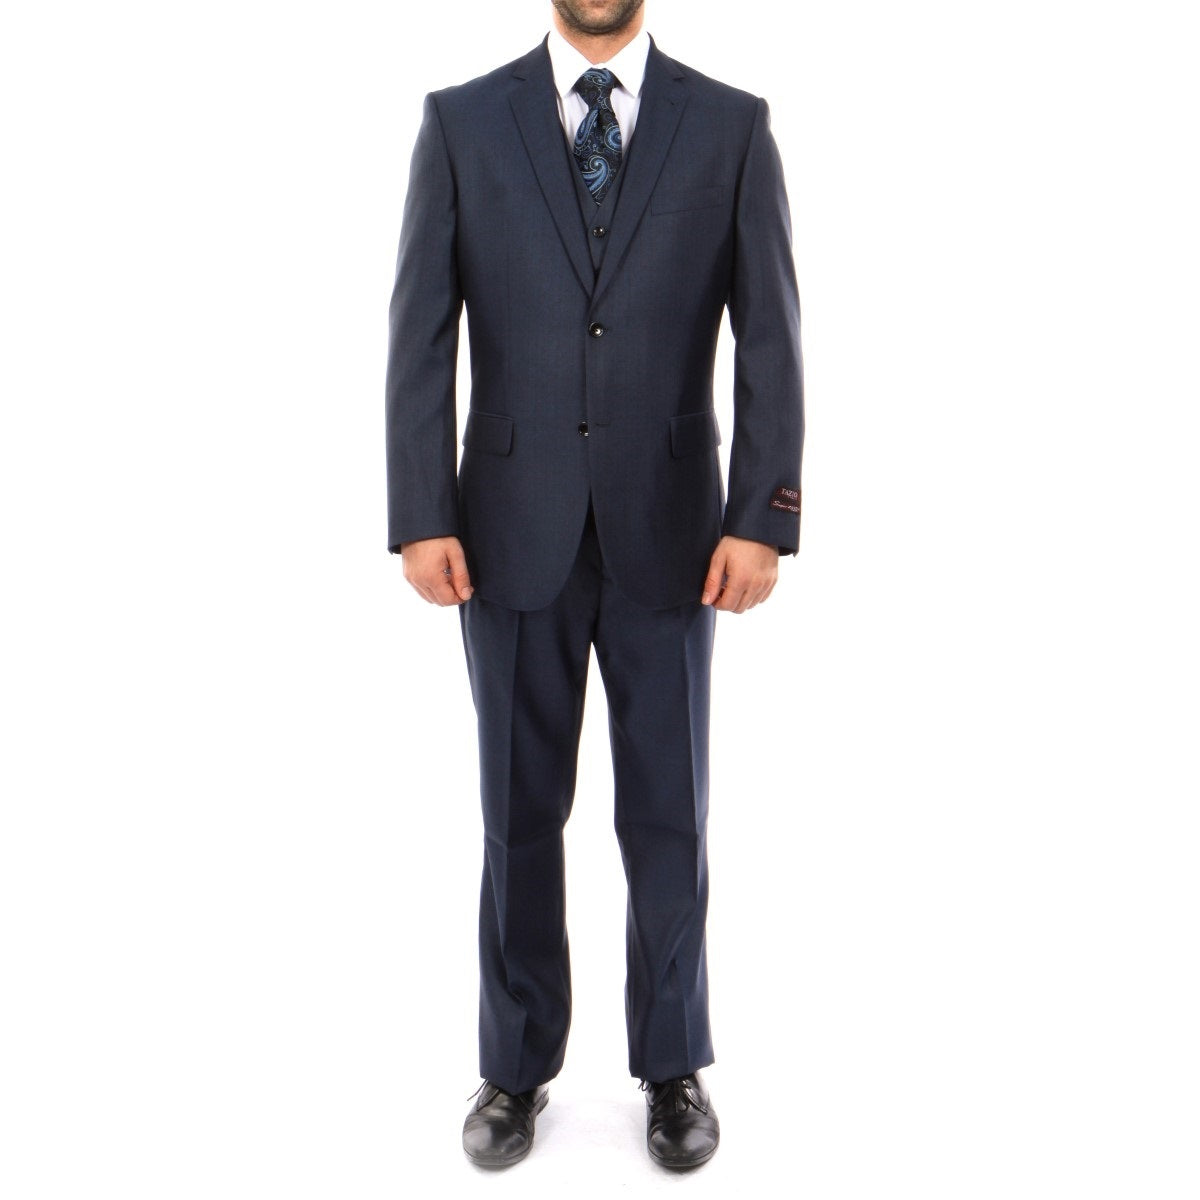 Traje Formal para Hombre TA-M158-03 Navy - Formal Suit for Men